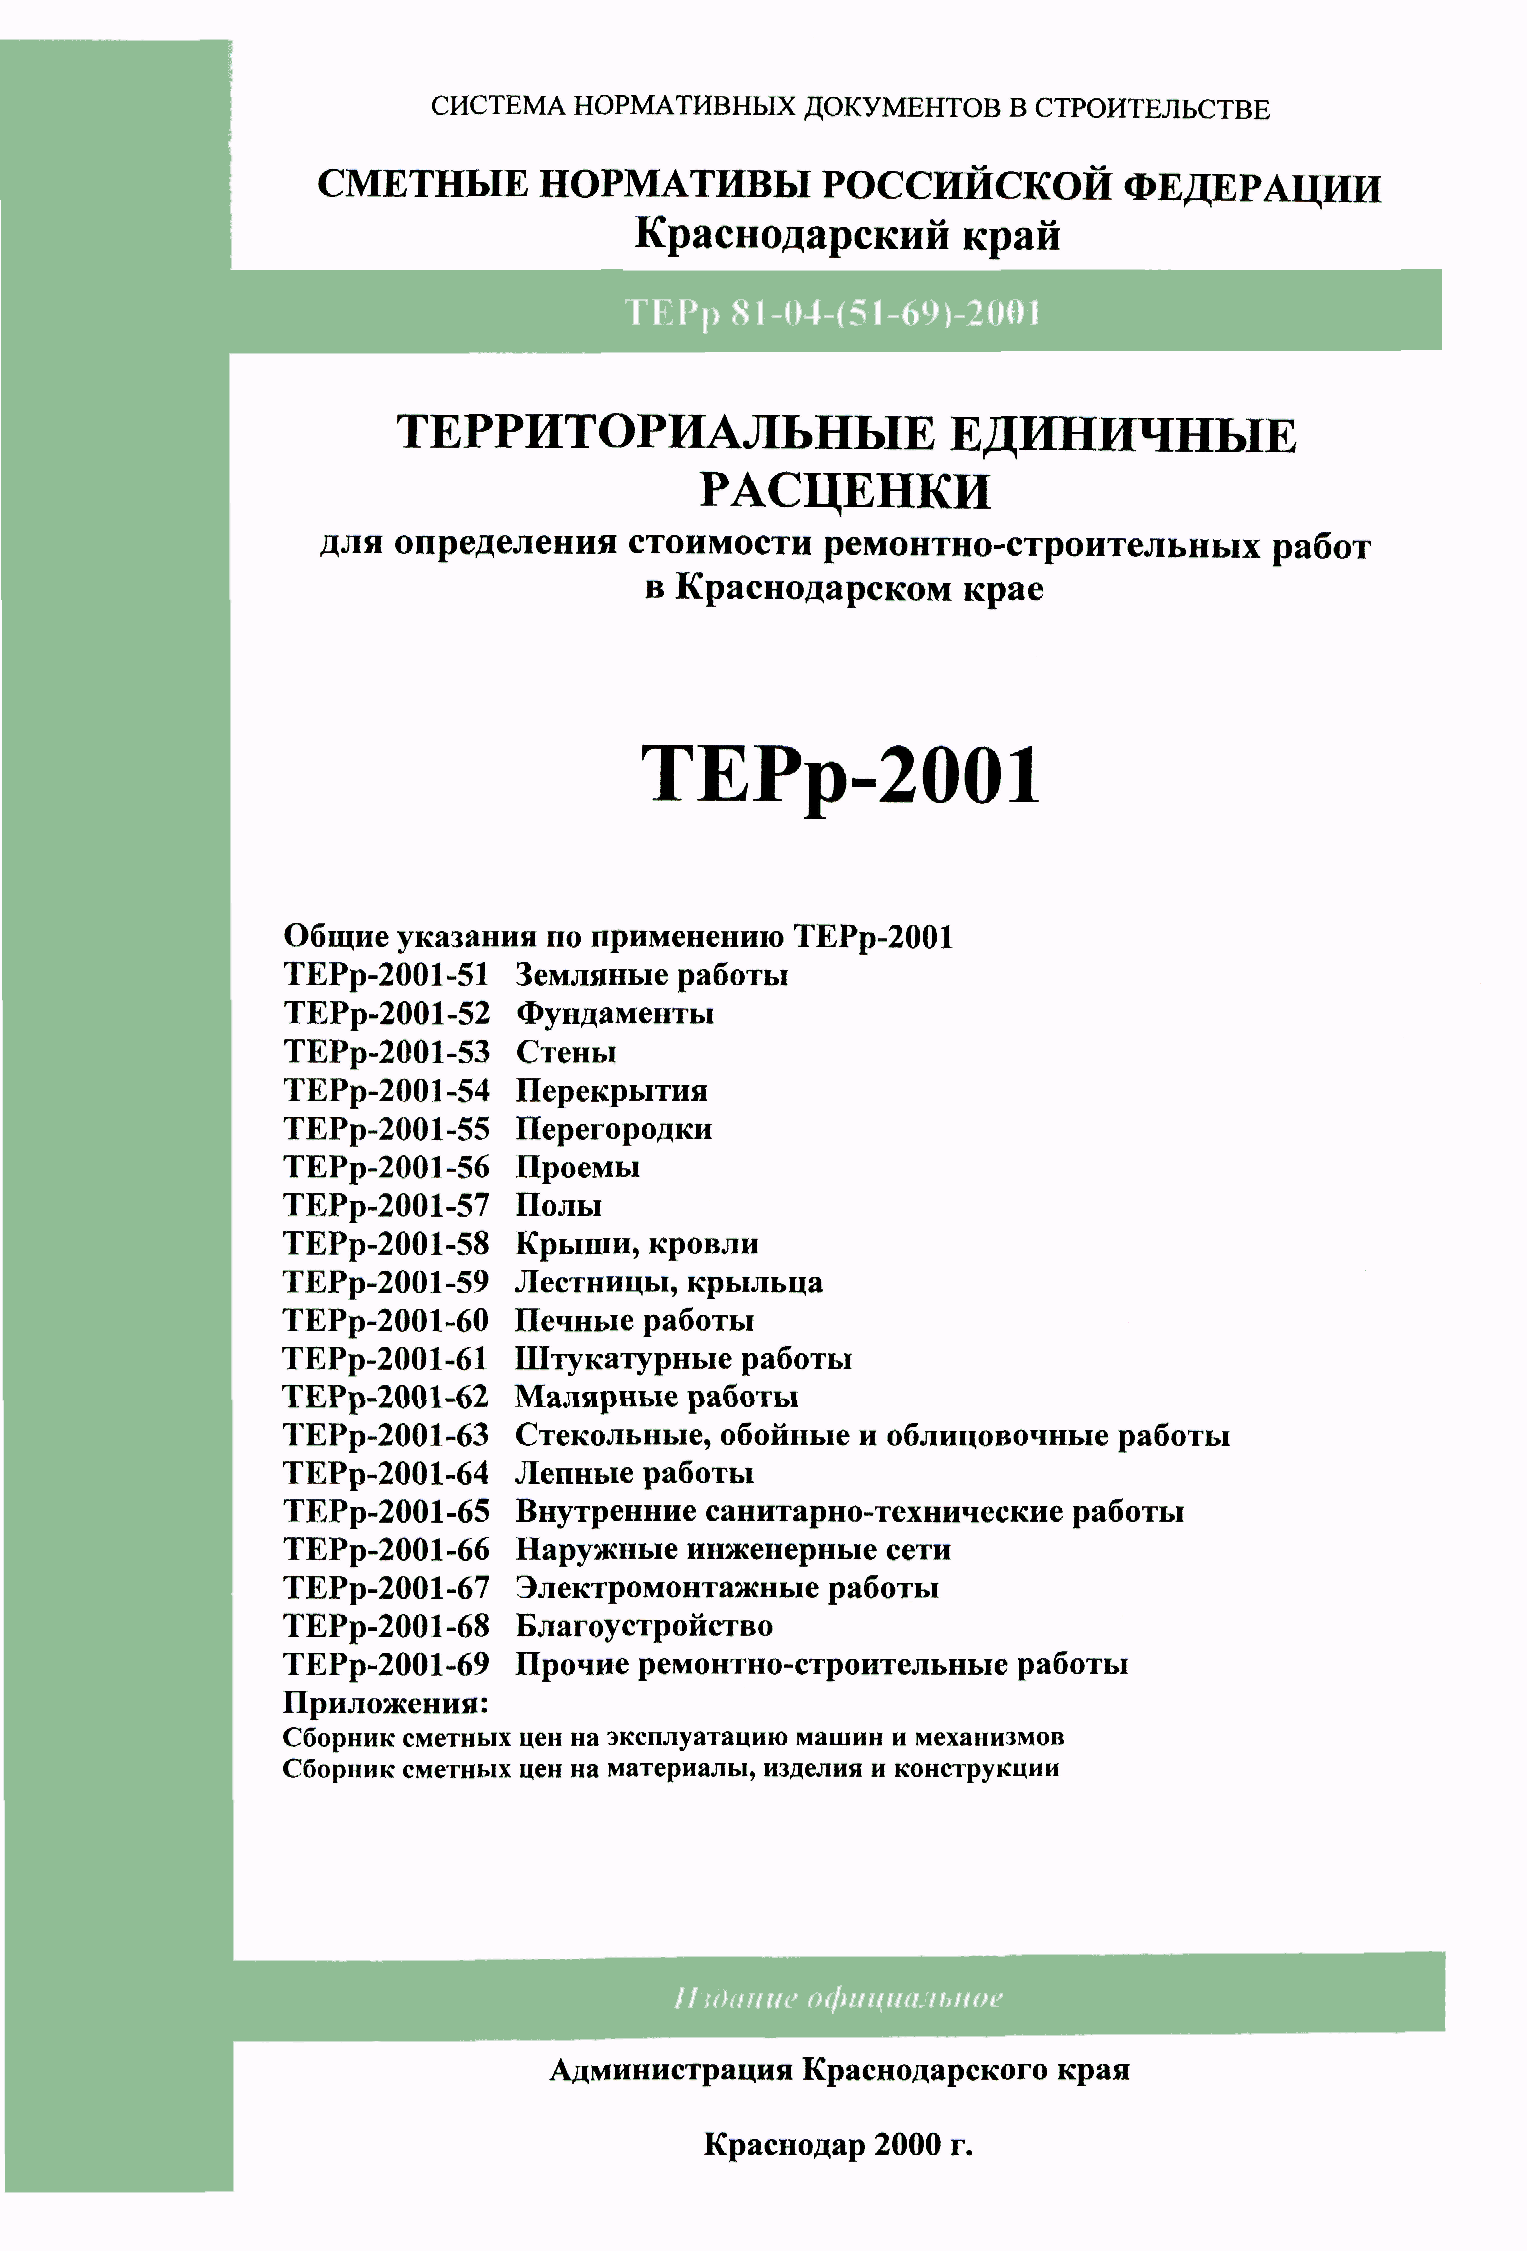 ТЕРр Краснодарский край 2001-66